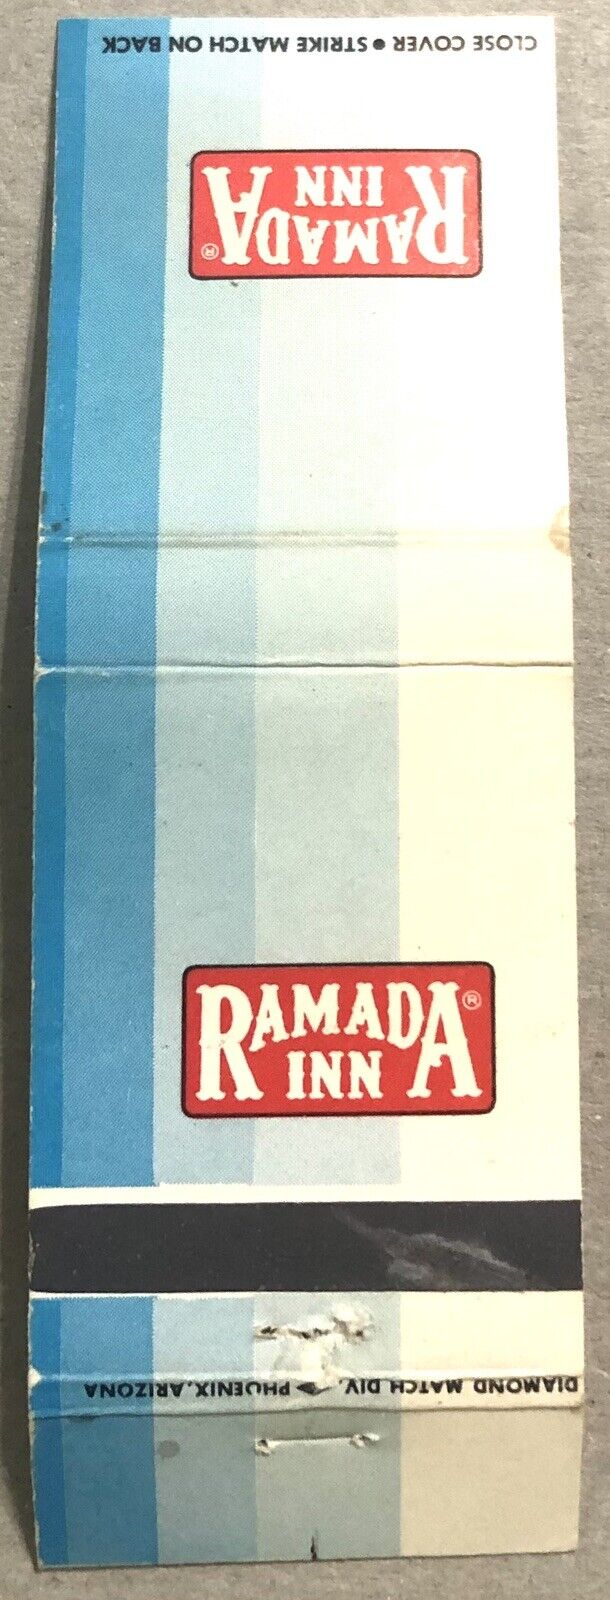 Vintage 20 Strike Matchbook Cover - Ramada Inn